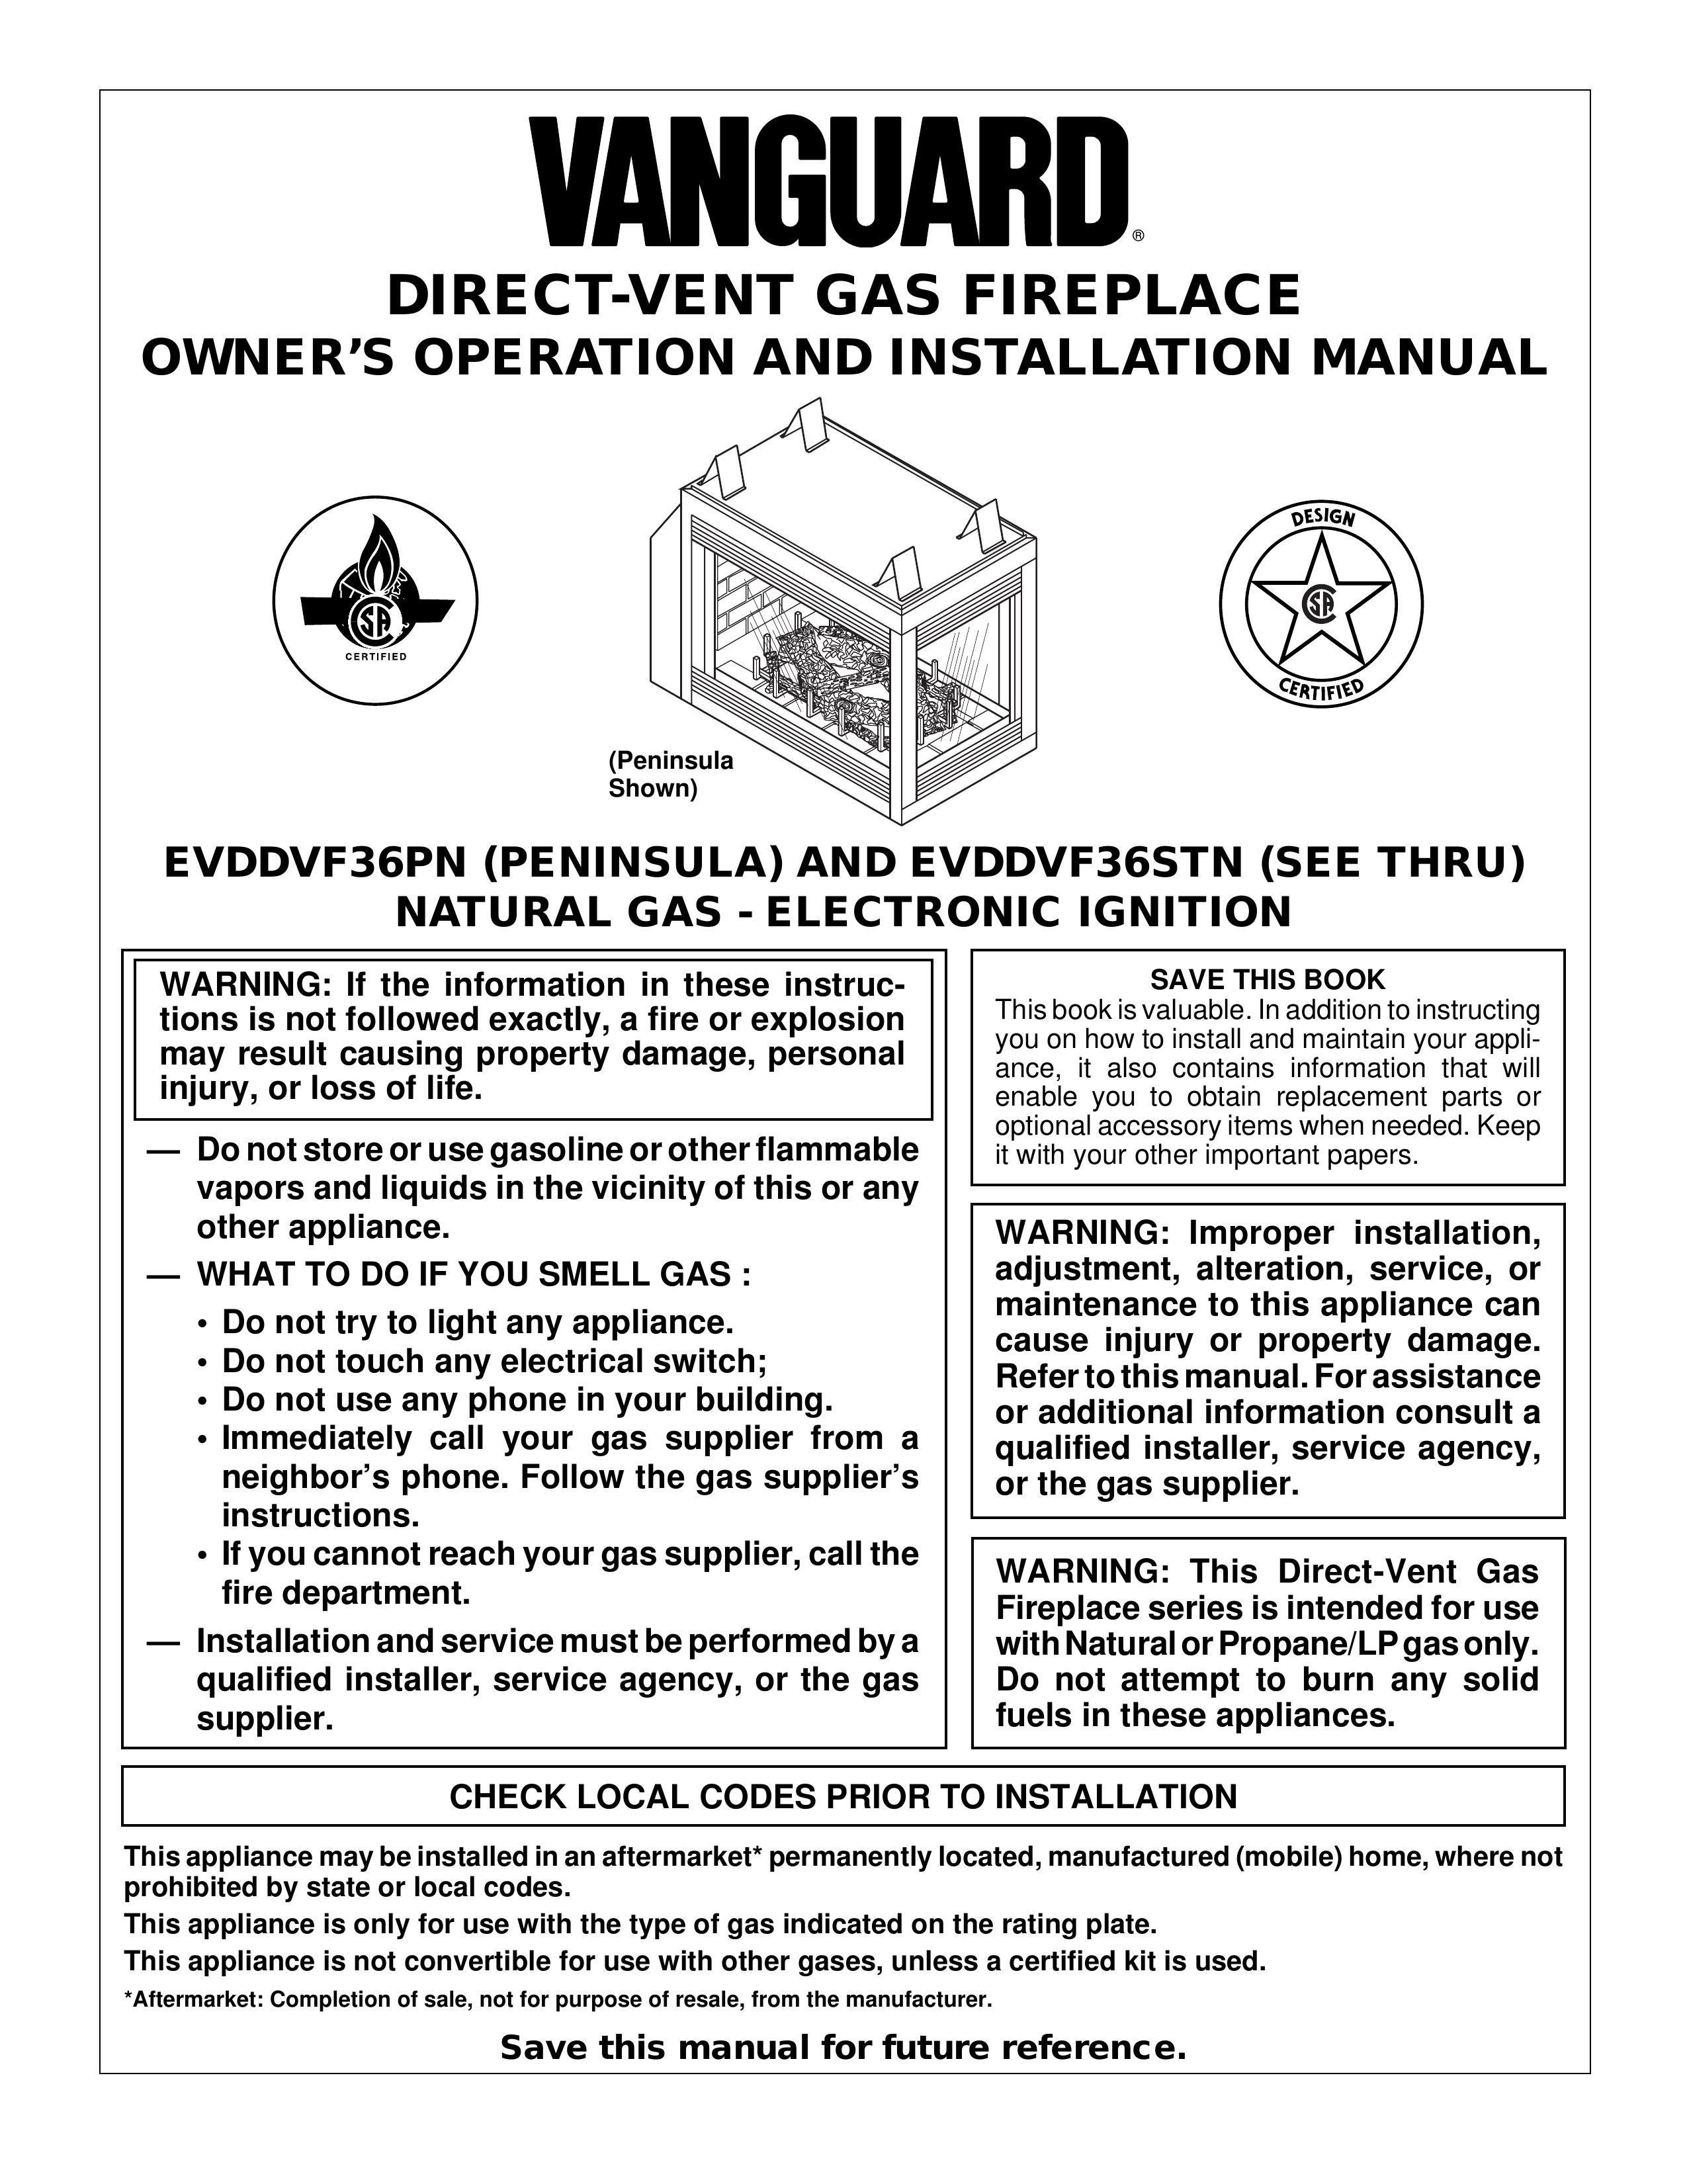 Desa EVDDVF36STN Fire Pit User Manual (Page 1)